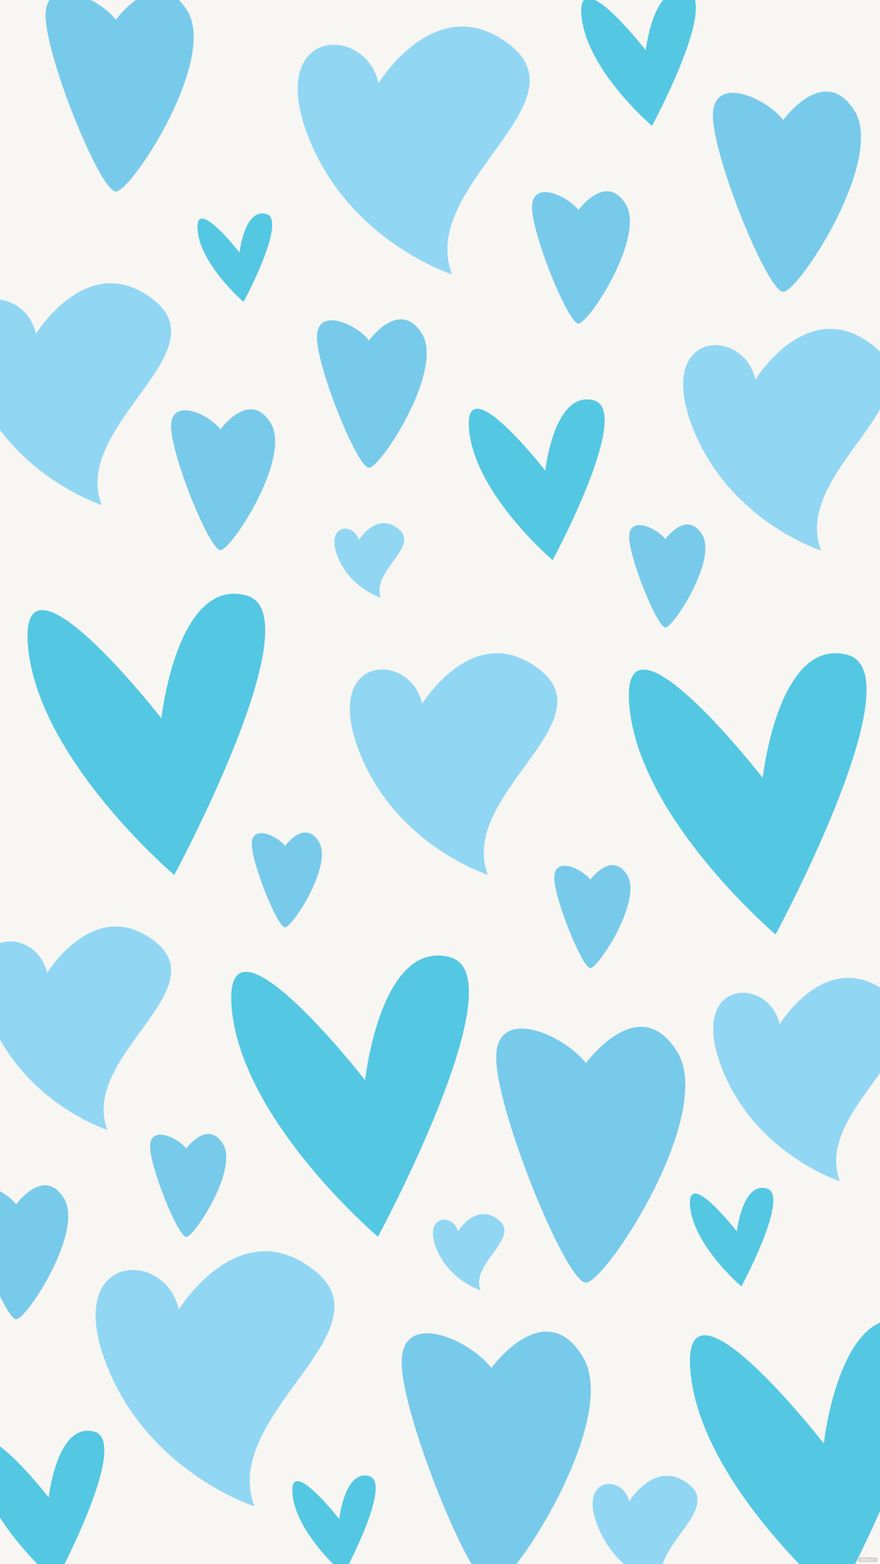 Free Pastel Blue Heart Background - EPS, Illustrator, JPG, SVG ...